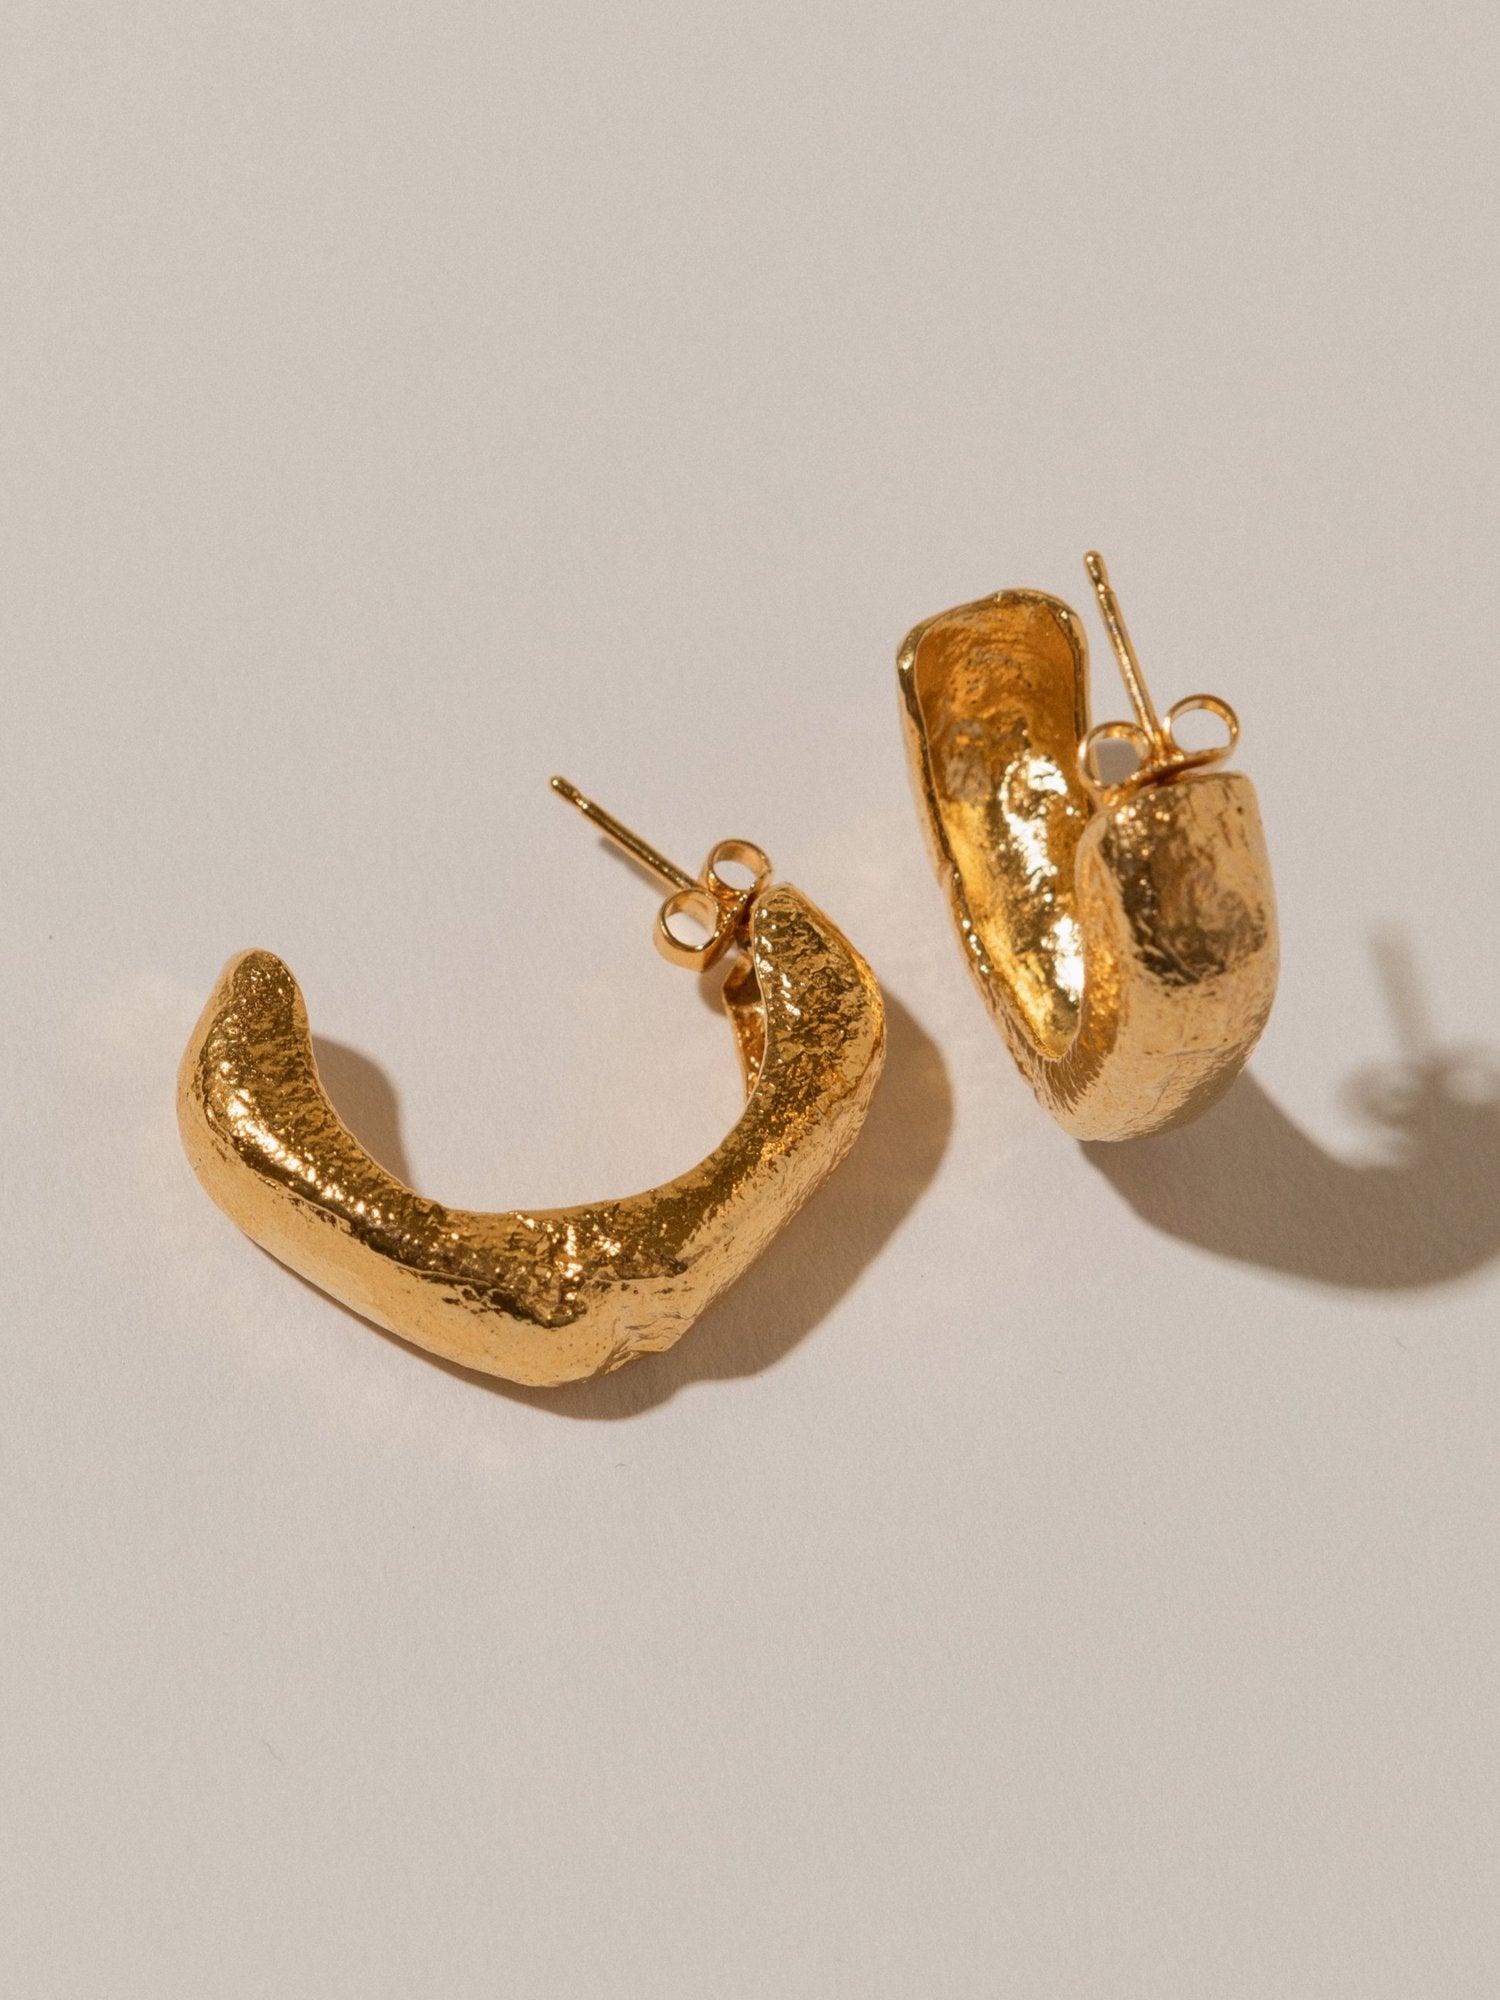 Pamela Card - The Treasures of Fruttuoso Earrings in Gold